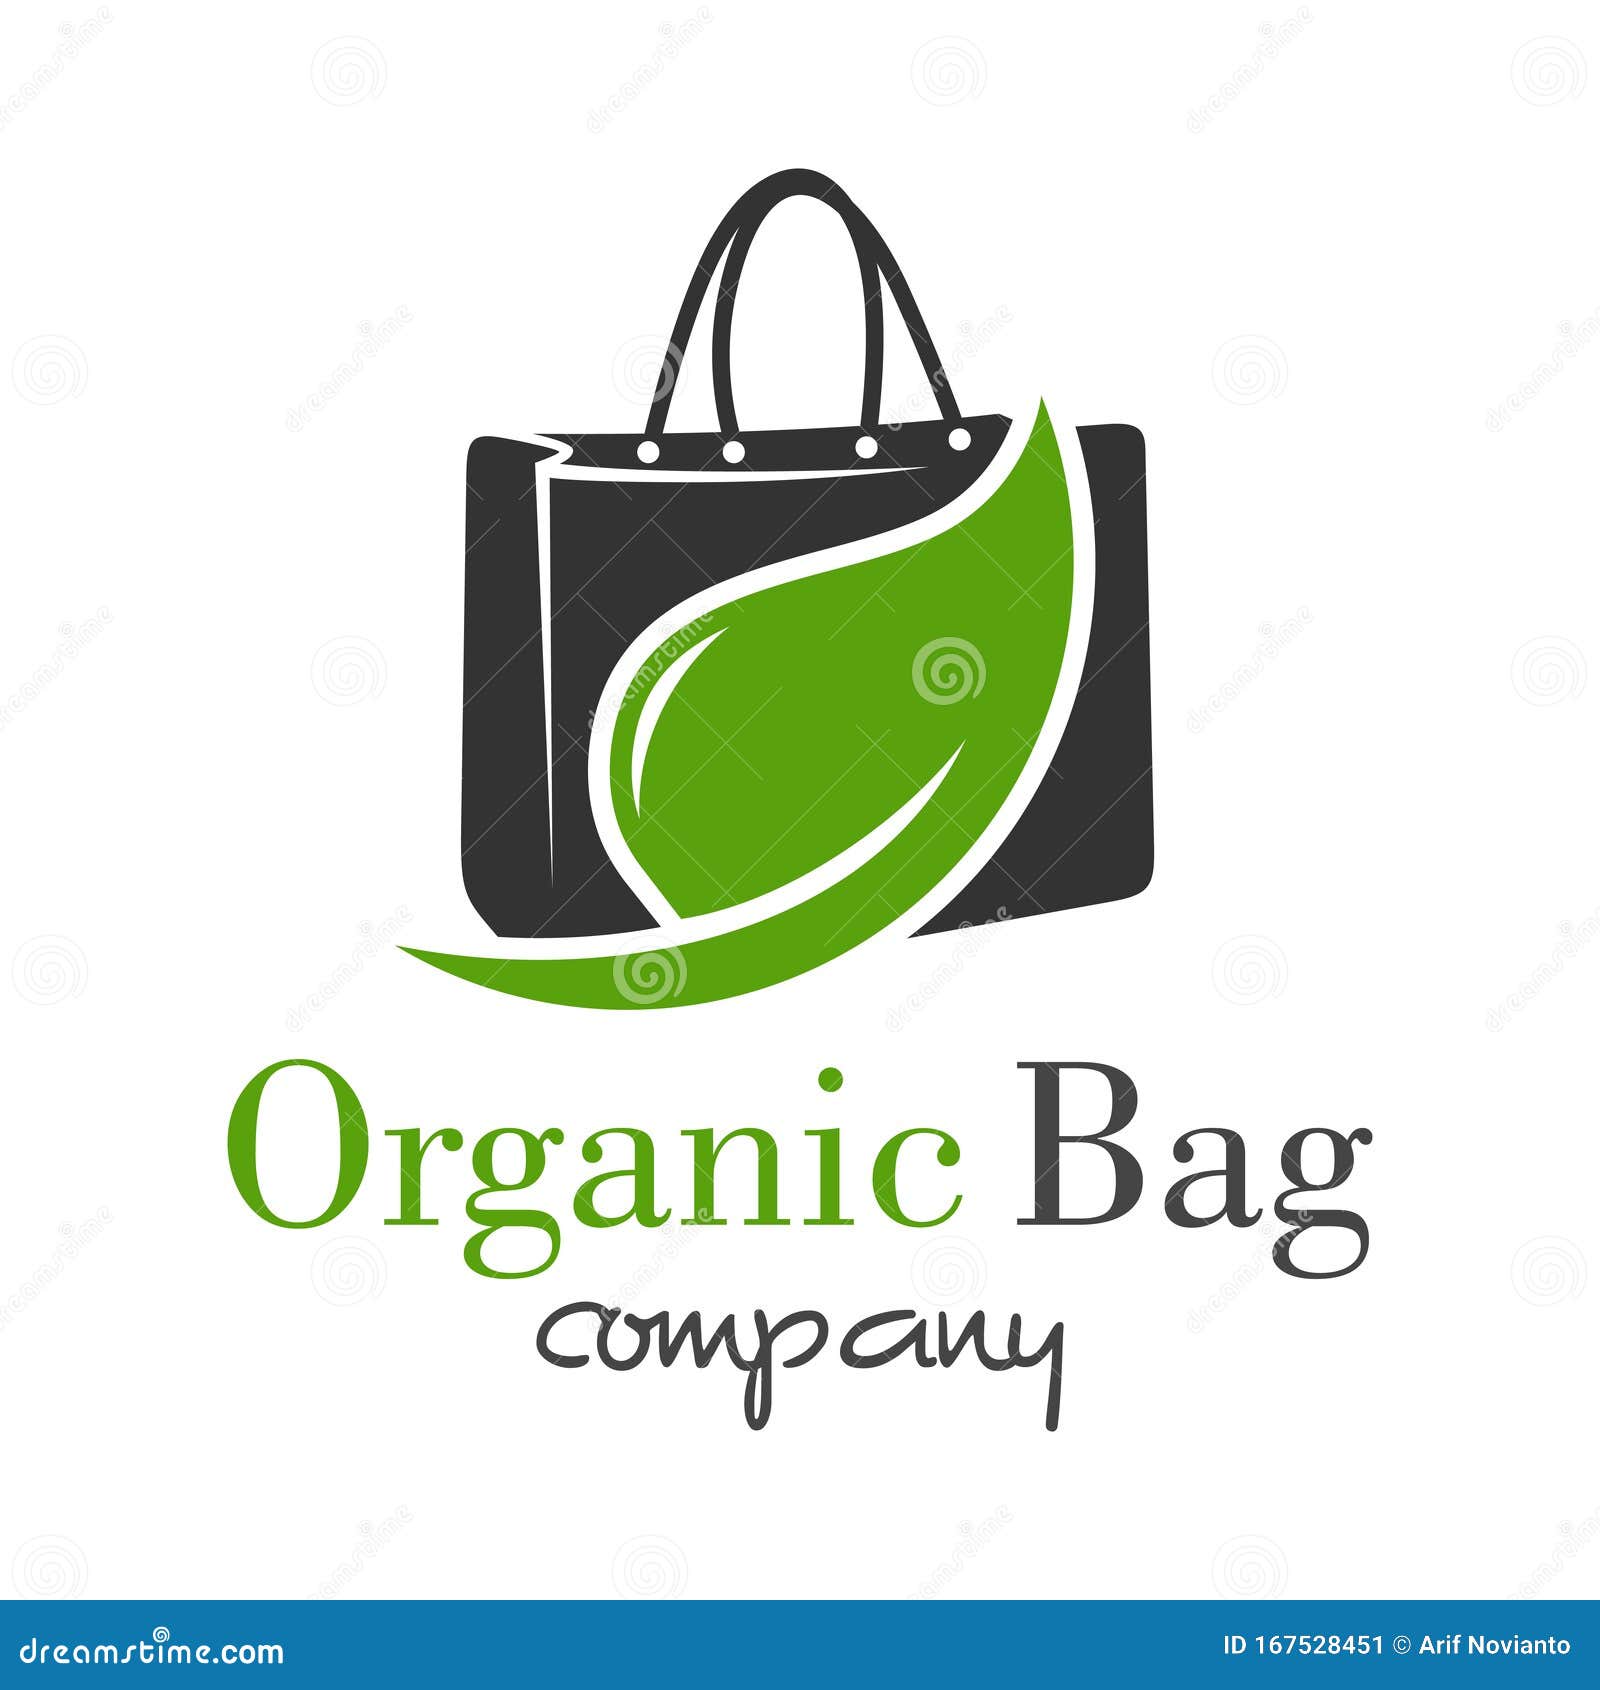 Bag Logo Stock Photos and Images - 123RF